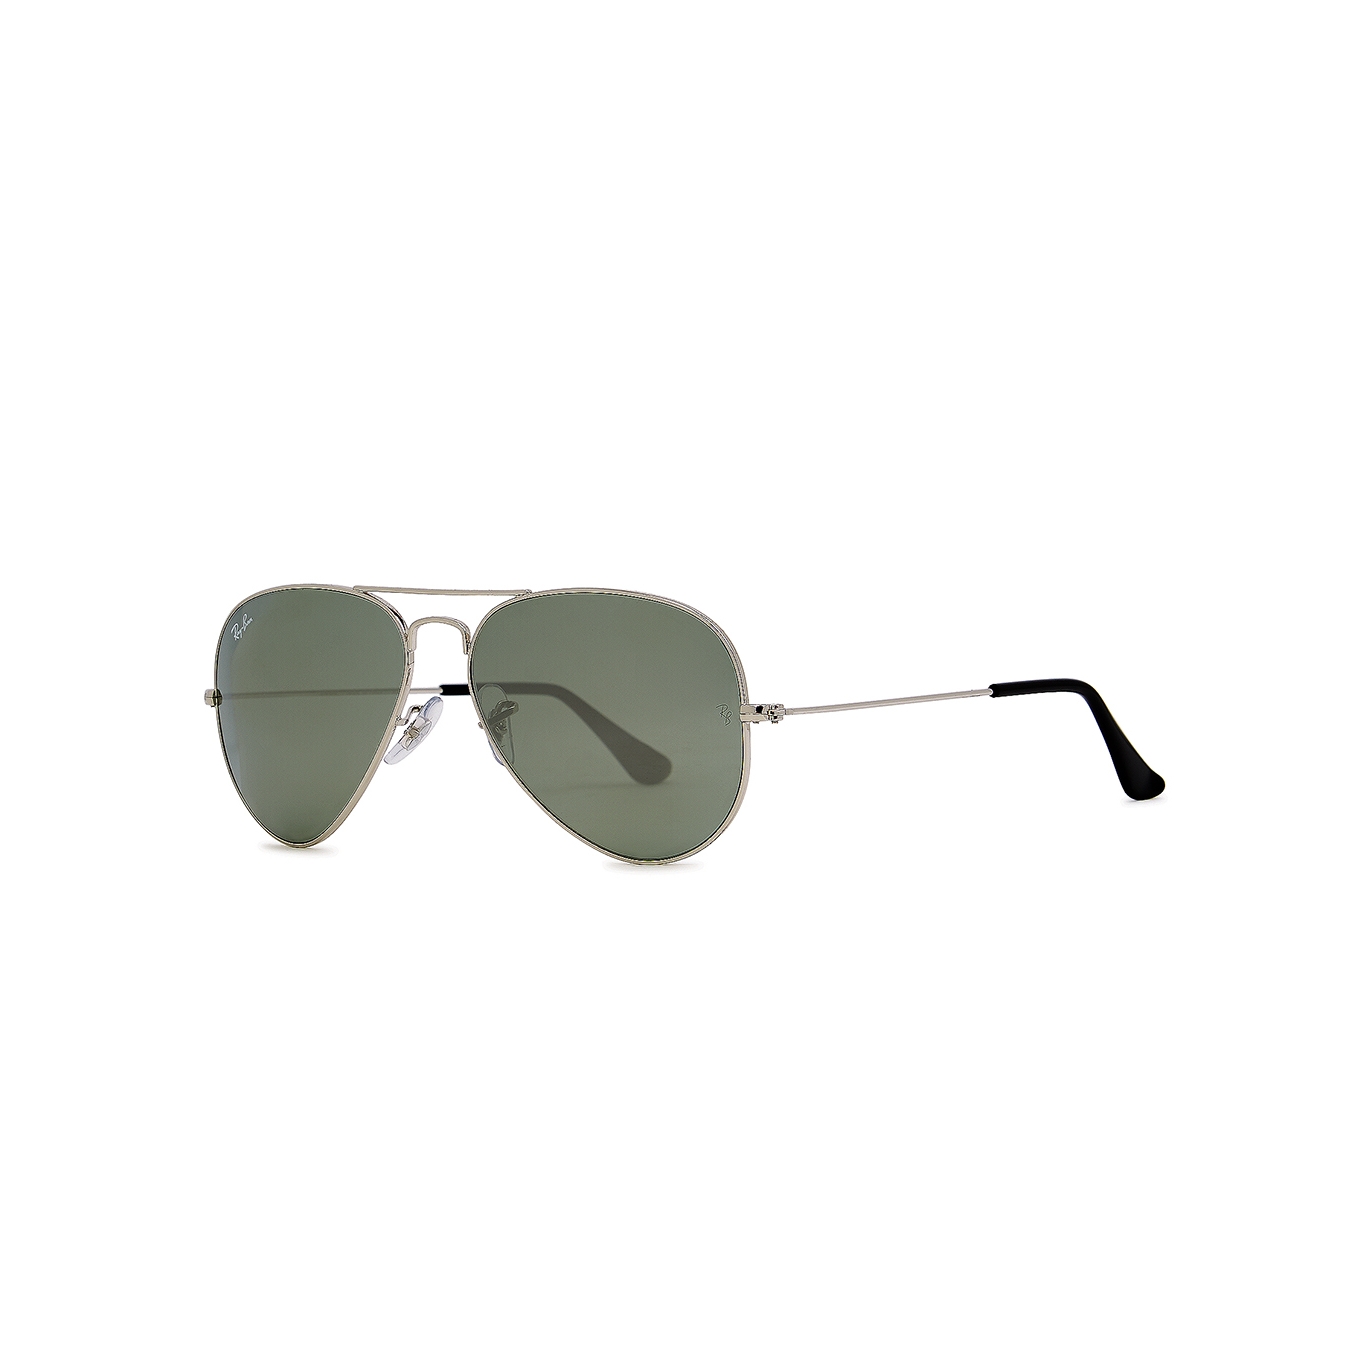 Ray-Ban Silver-tone Aviator Sunglasses, Sunglasses, Mirrored Lenses